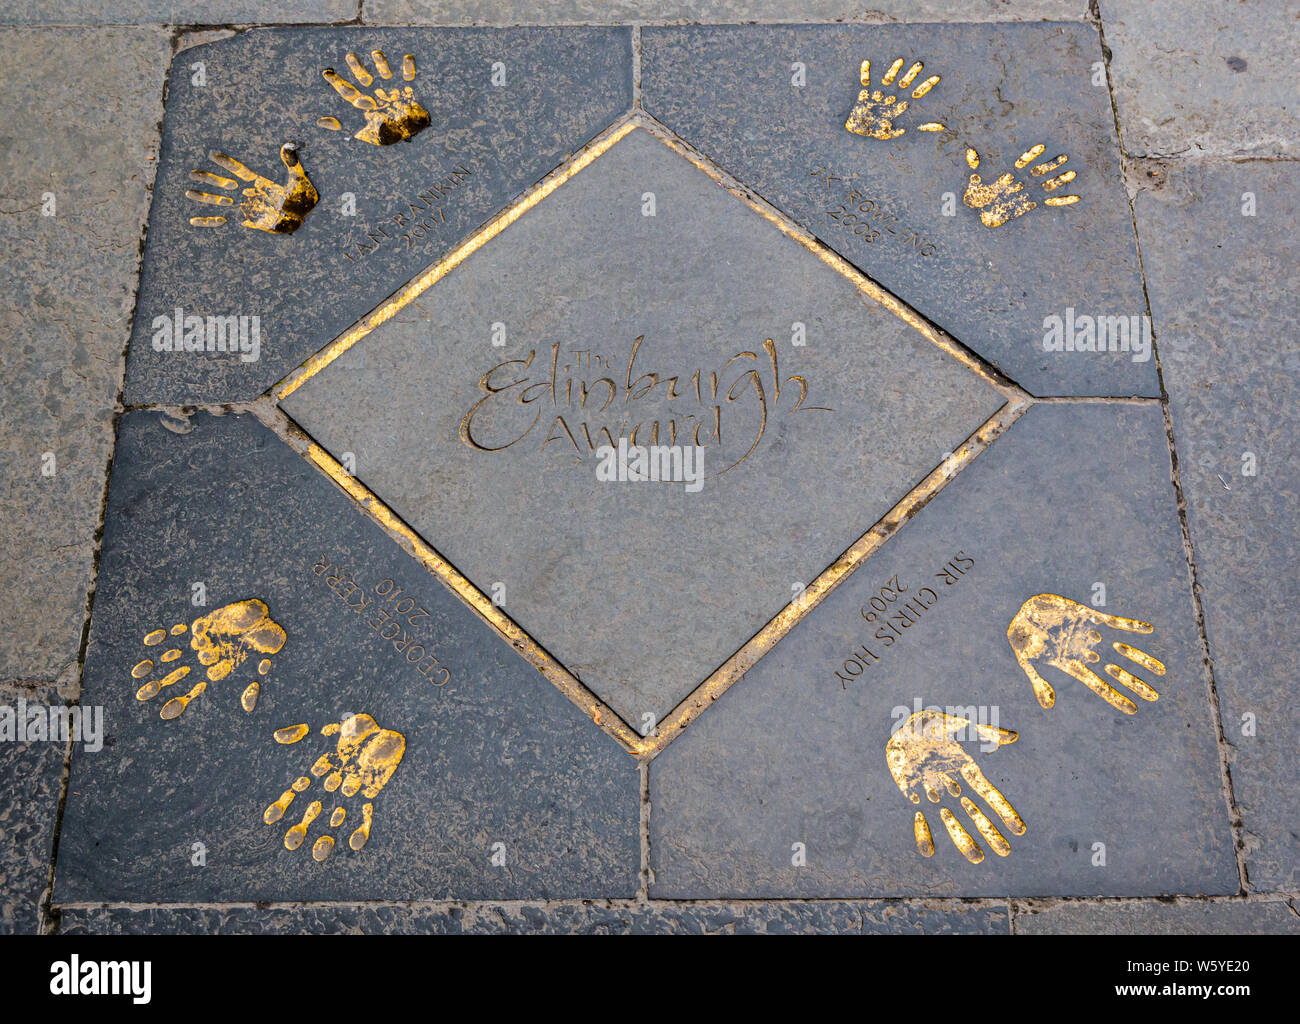 Paving slab hand prints by JK Rowling, Sir Chris Hoy, George Kerr & Ian Rankin, City Chambers, Royal Mile, Edinburgh, Scotland Stock Photo